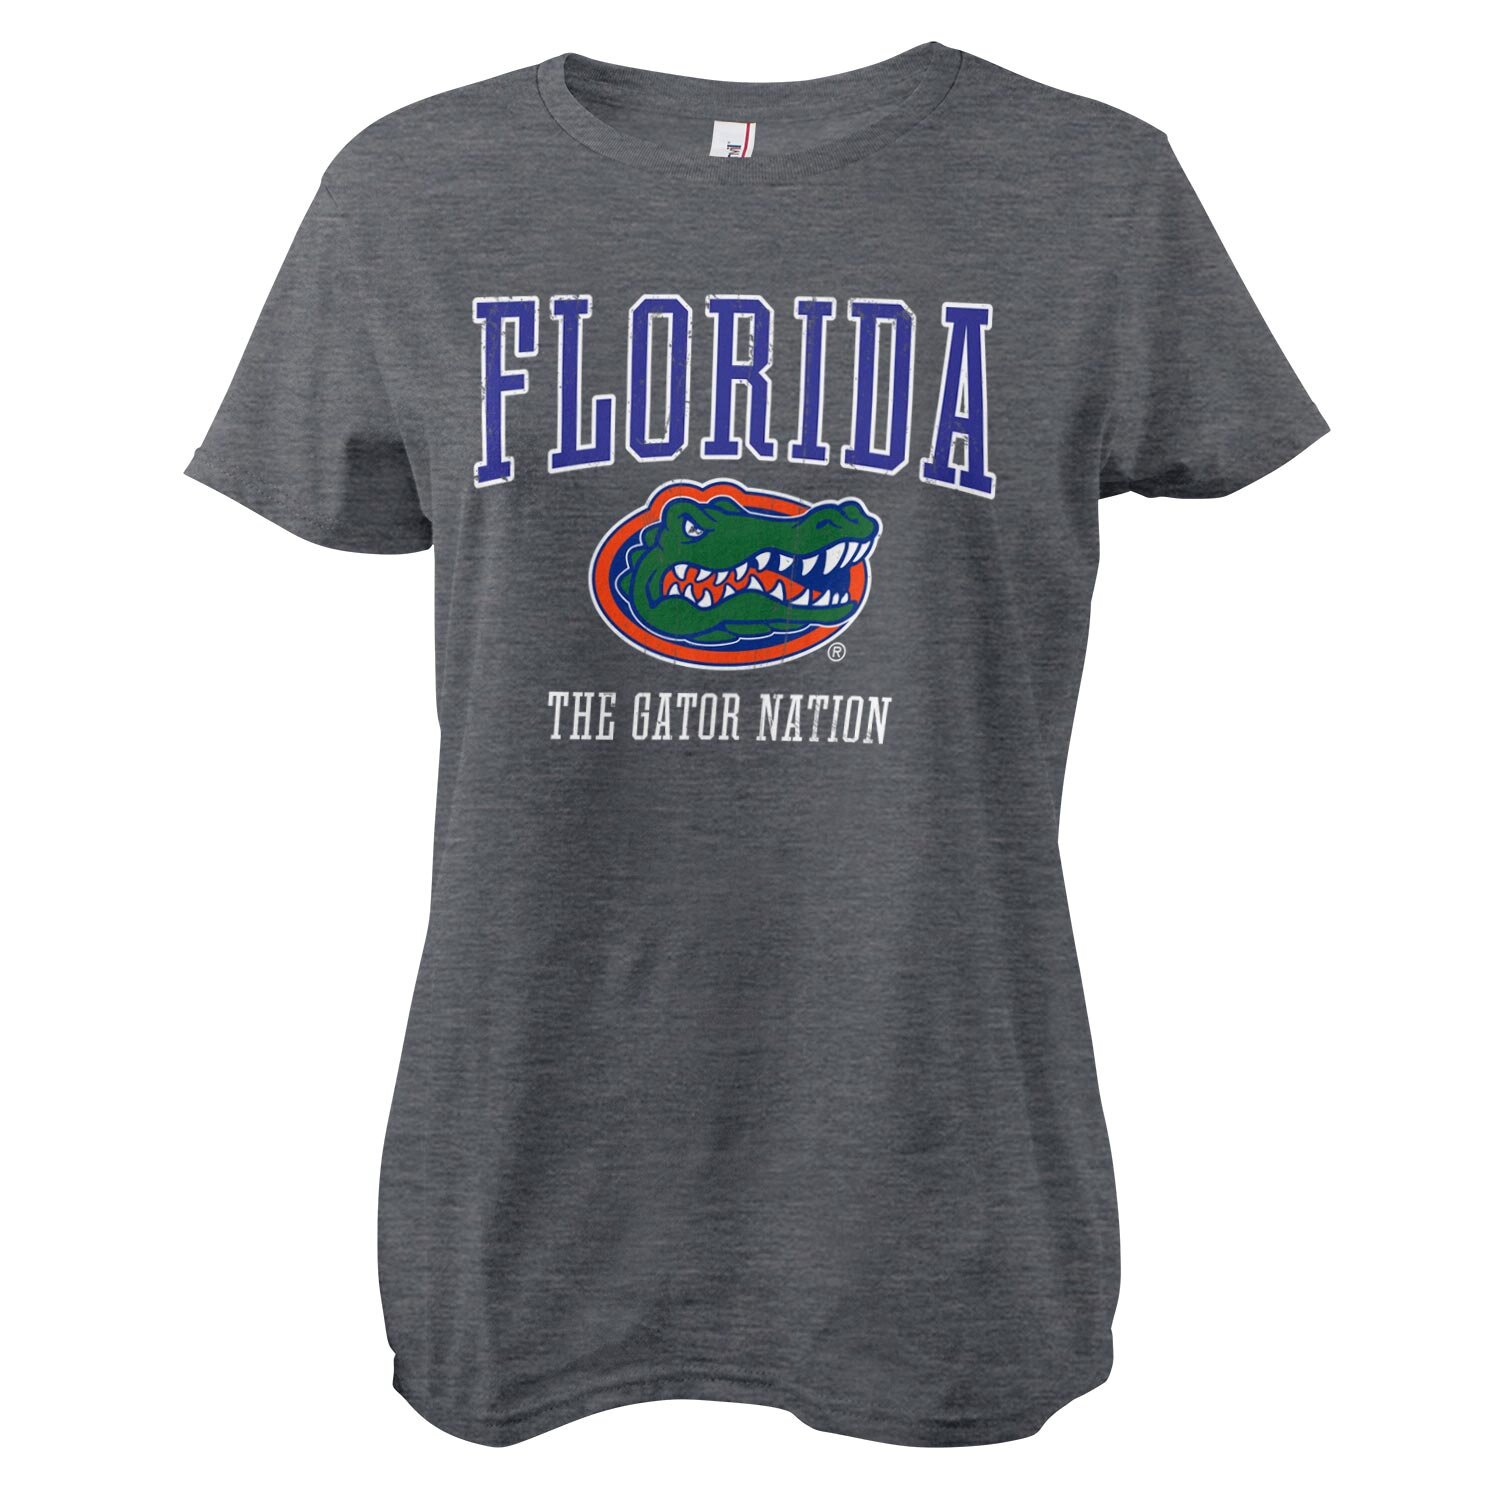 Florida - The Gator Nation Girly Tee